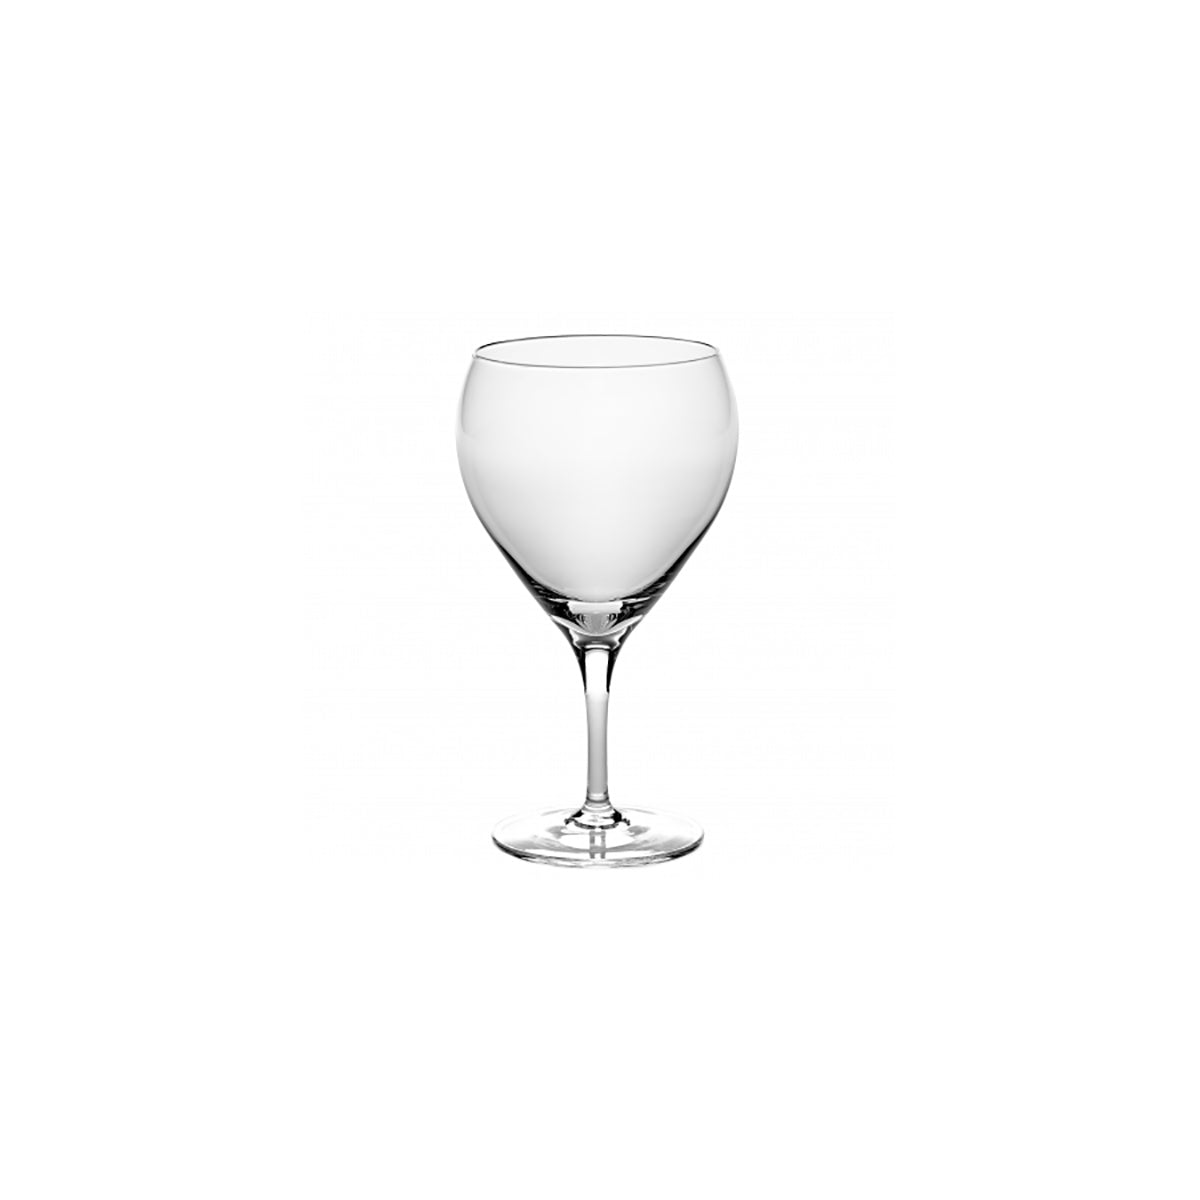 SERAXB0820006 Serax Inku Champagne Glass 200ml Tomkin Australia Hospitality Supplies